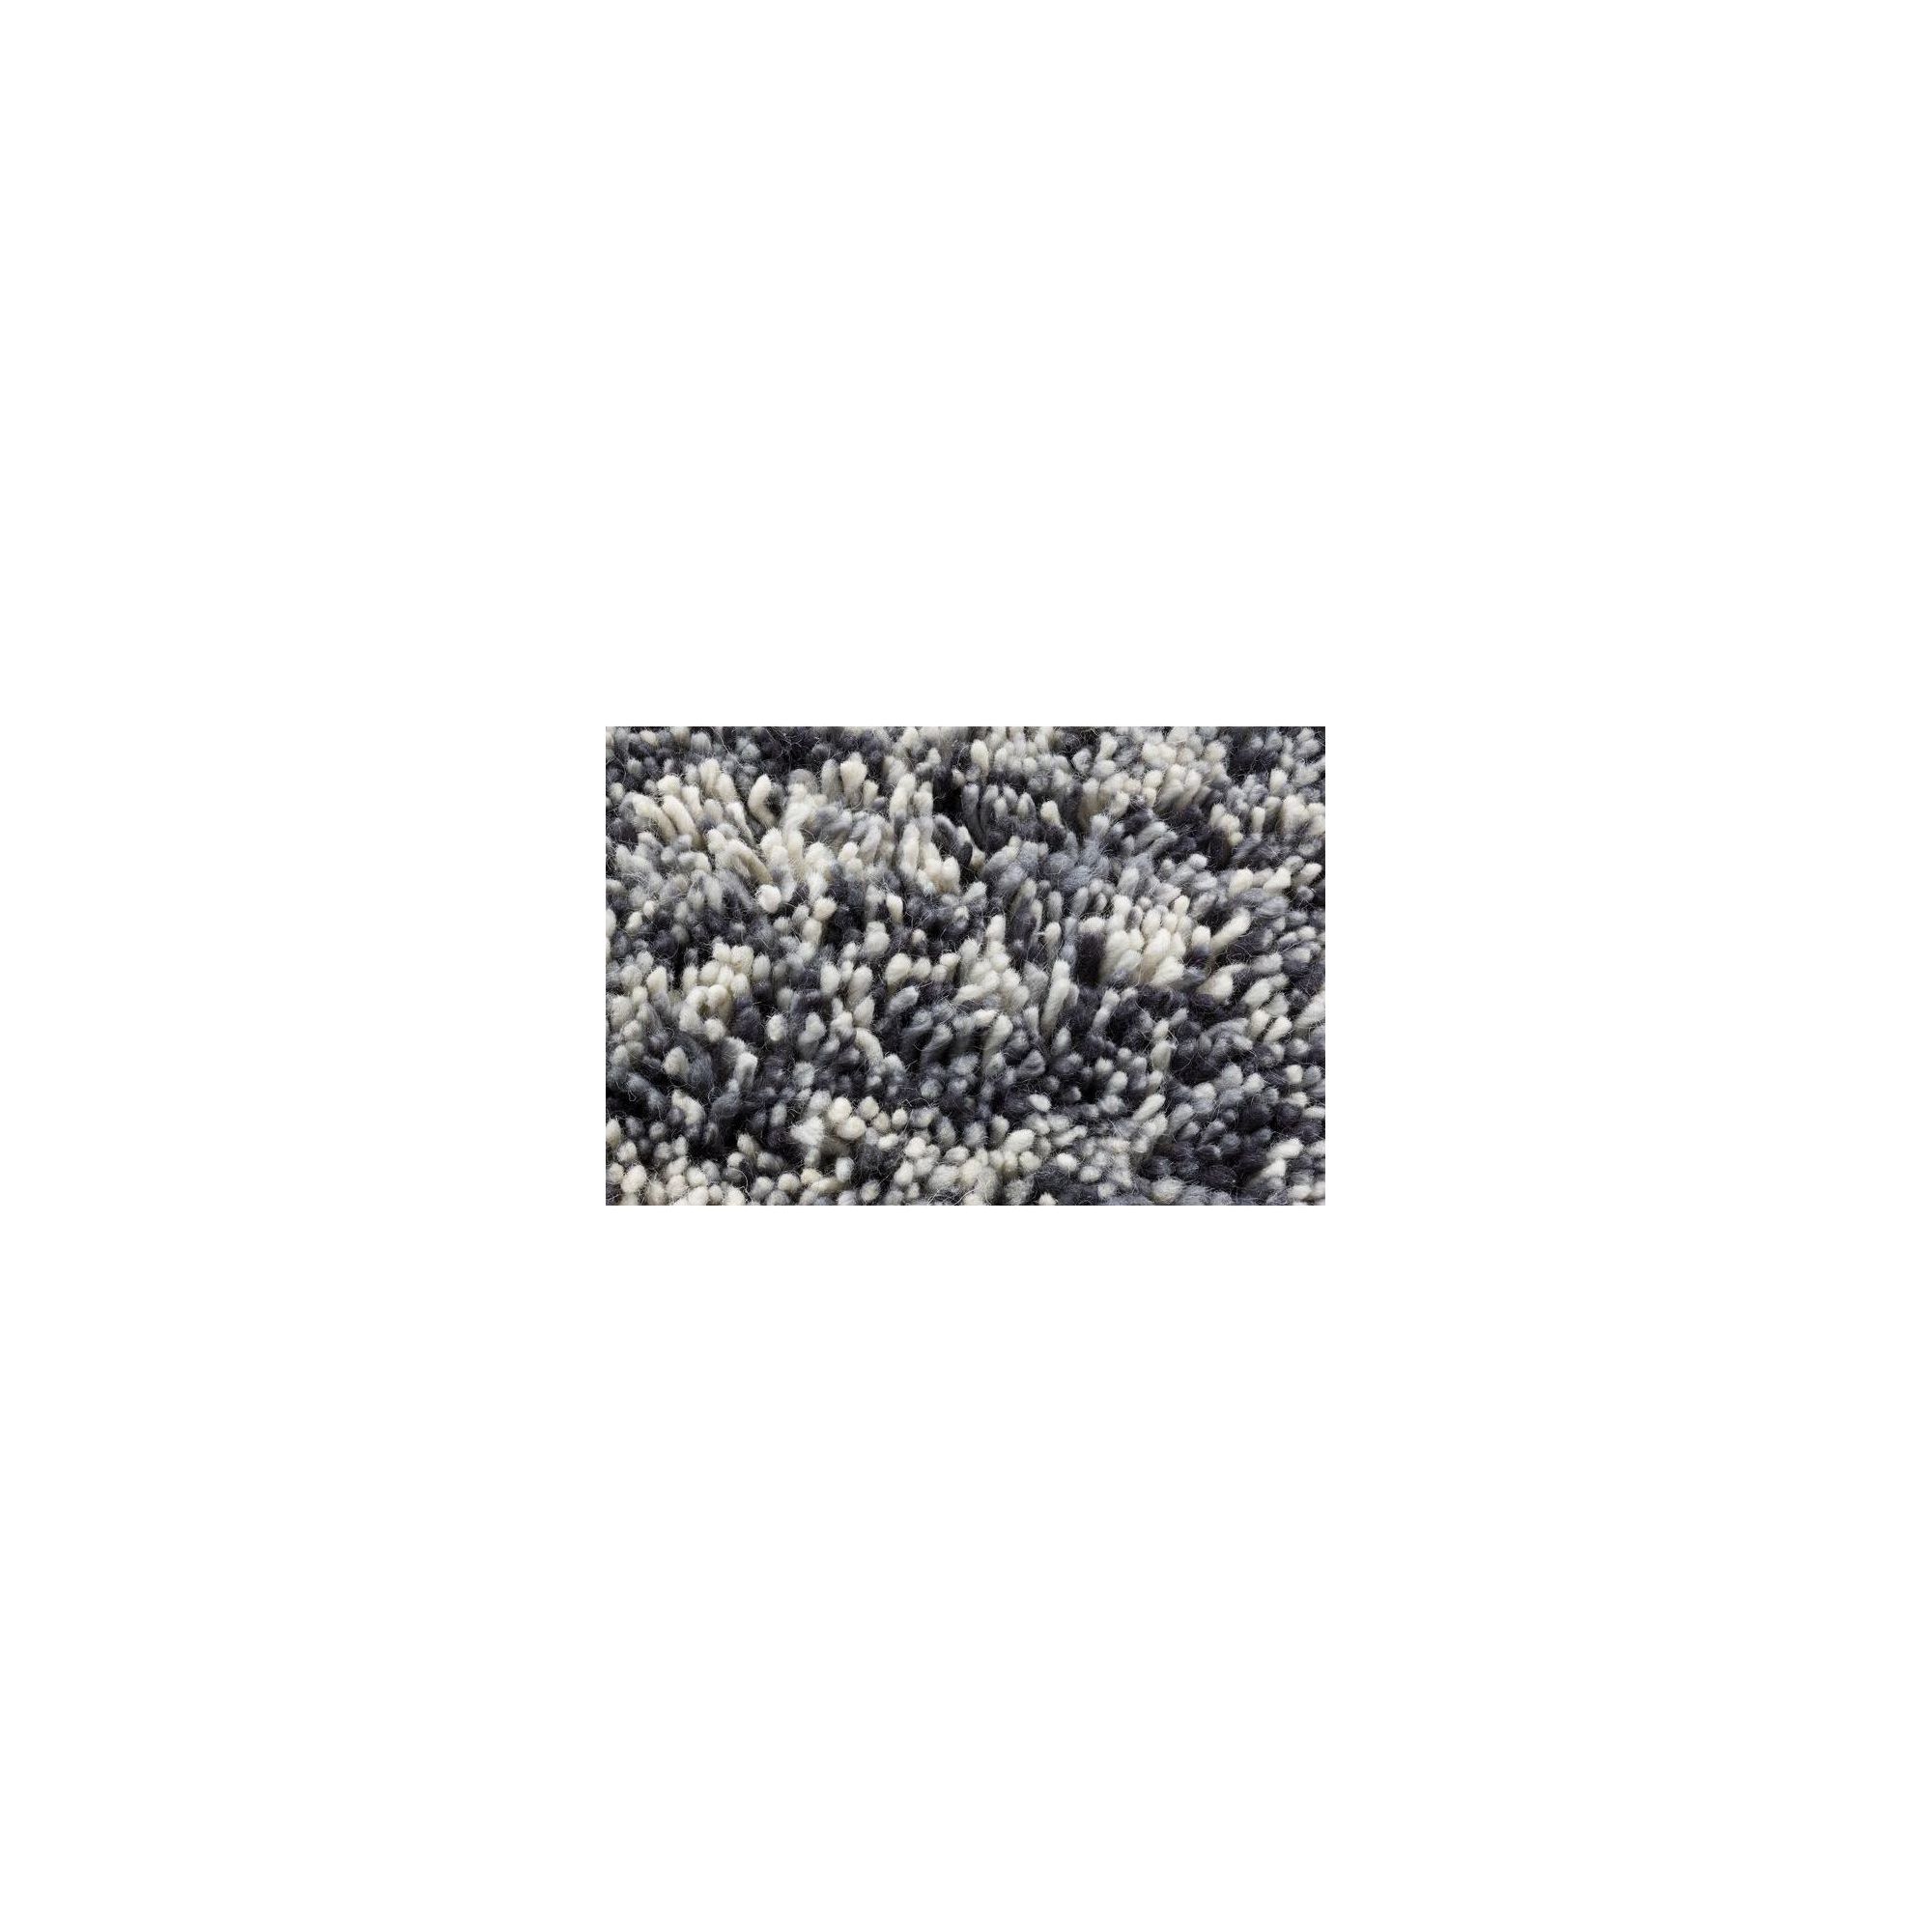 Linie Design Coral Granite Shag Rug - 200cm x 140cm at Tesco Direct